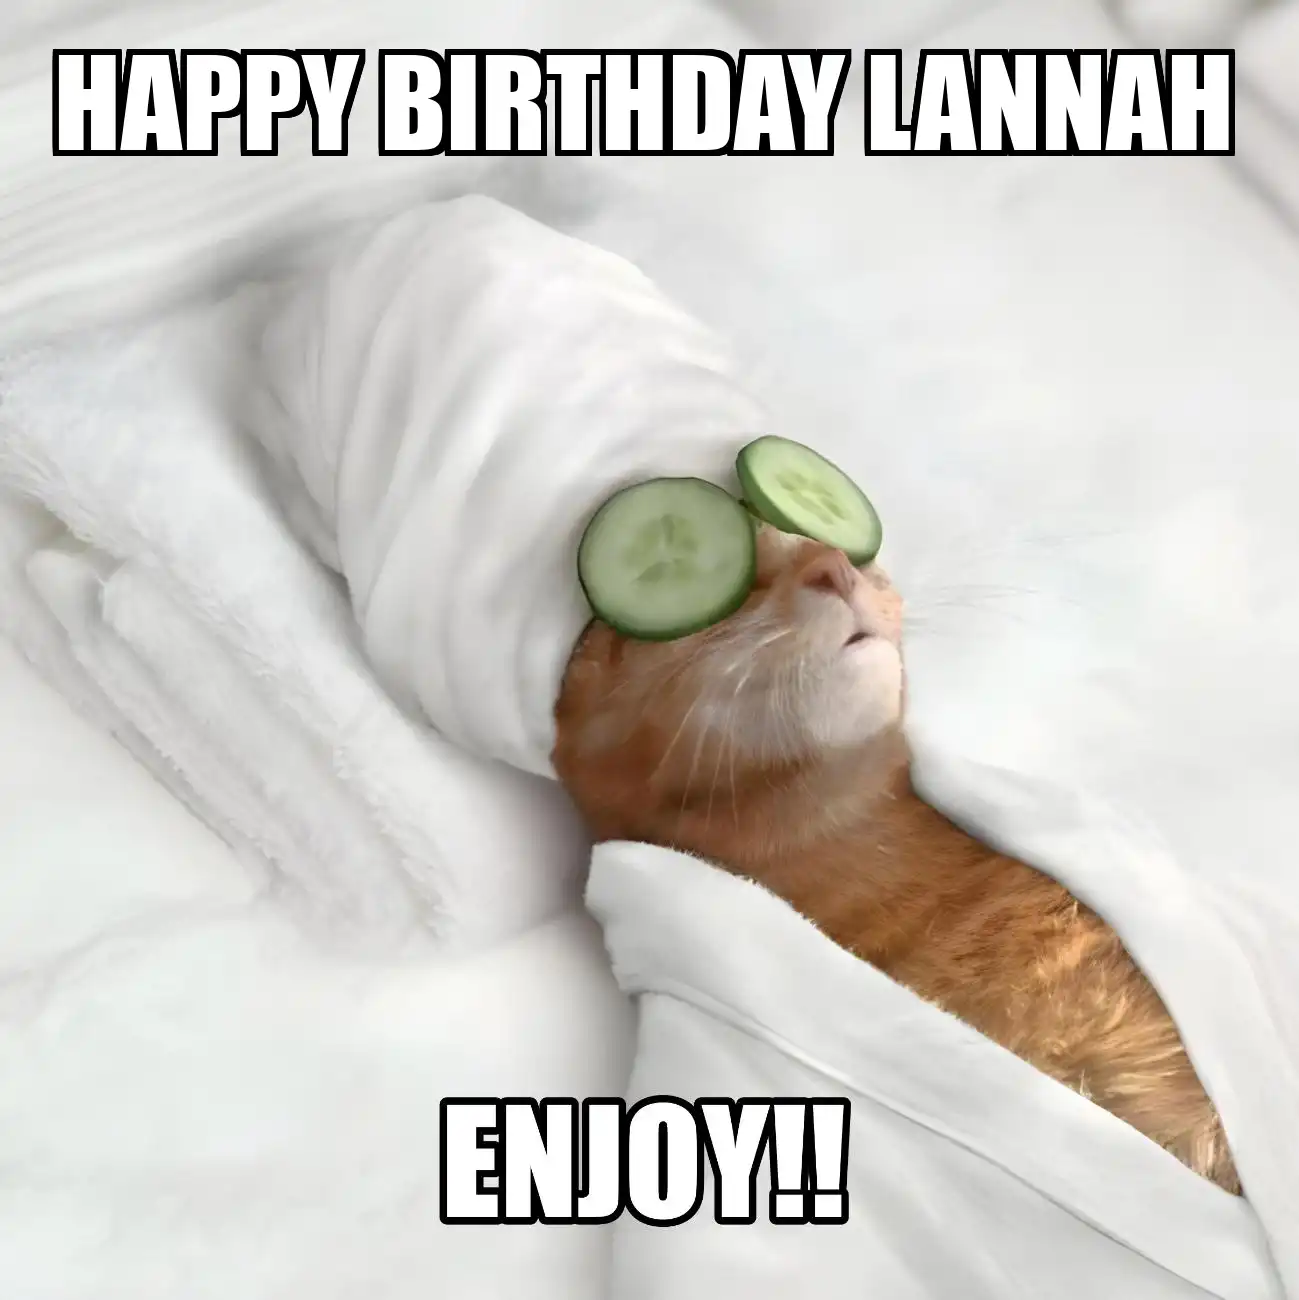 Happy Birthday Lannah Enjoy Cat Meme